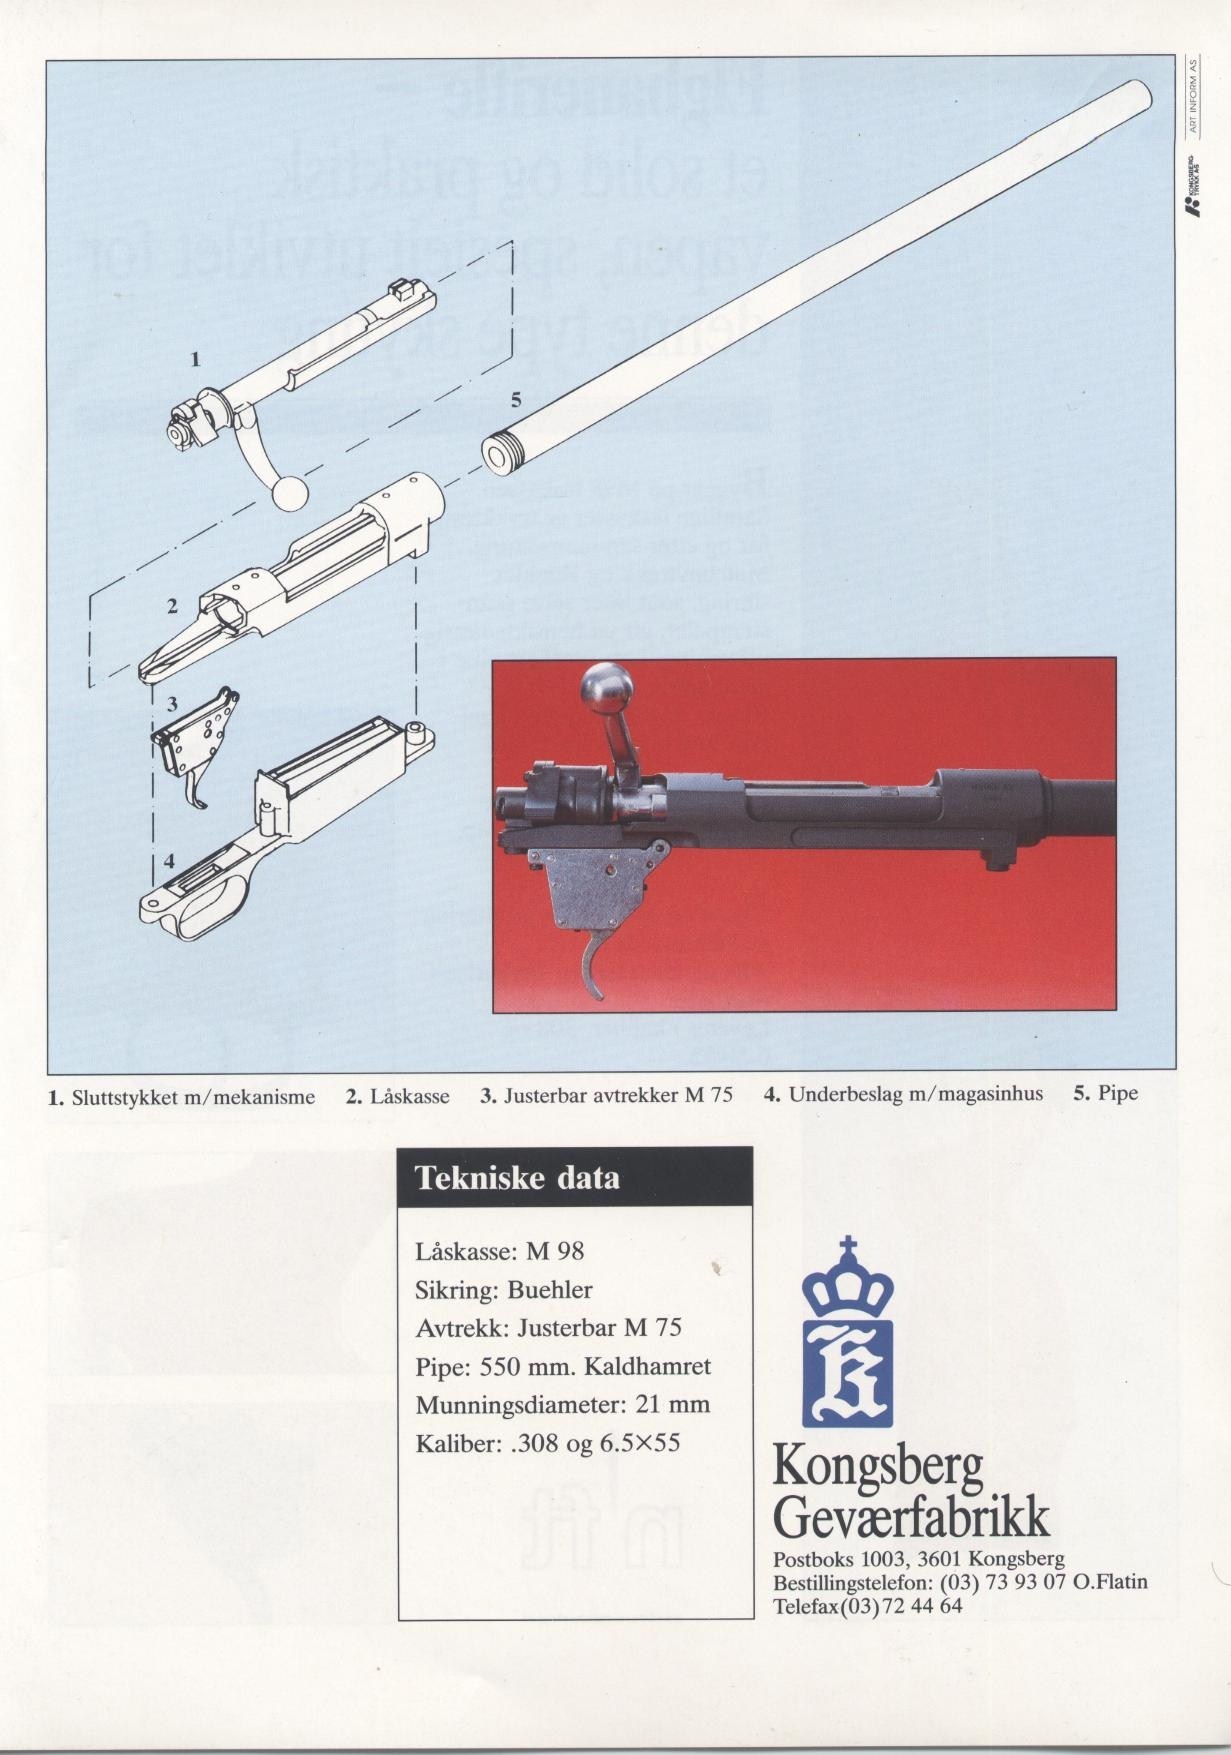 ./guns/rifle/bilder/Rifle-Kongsberg-M85E-5.JPG